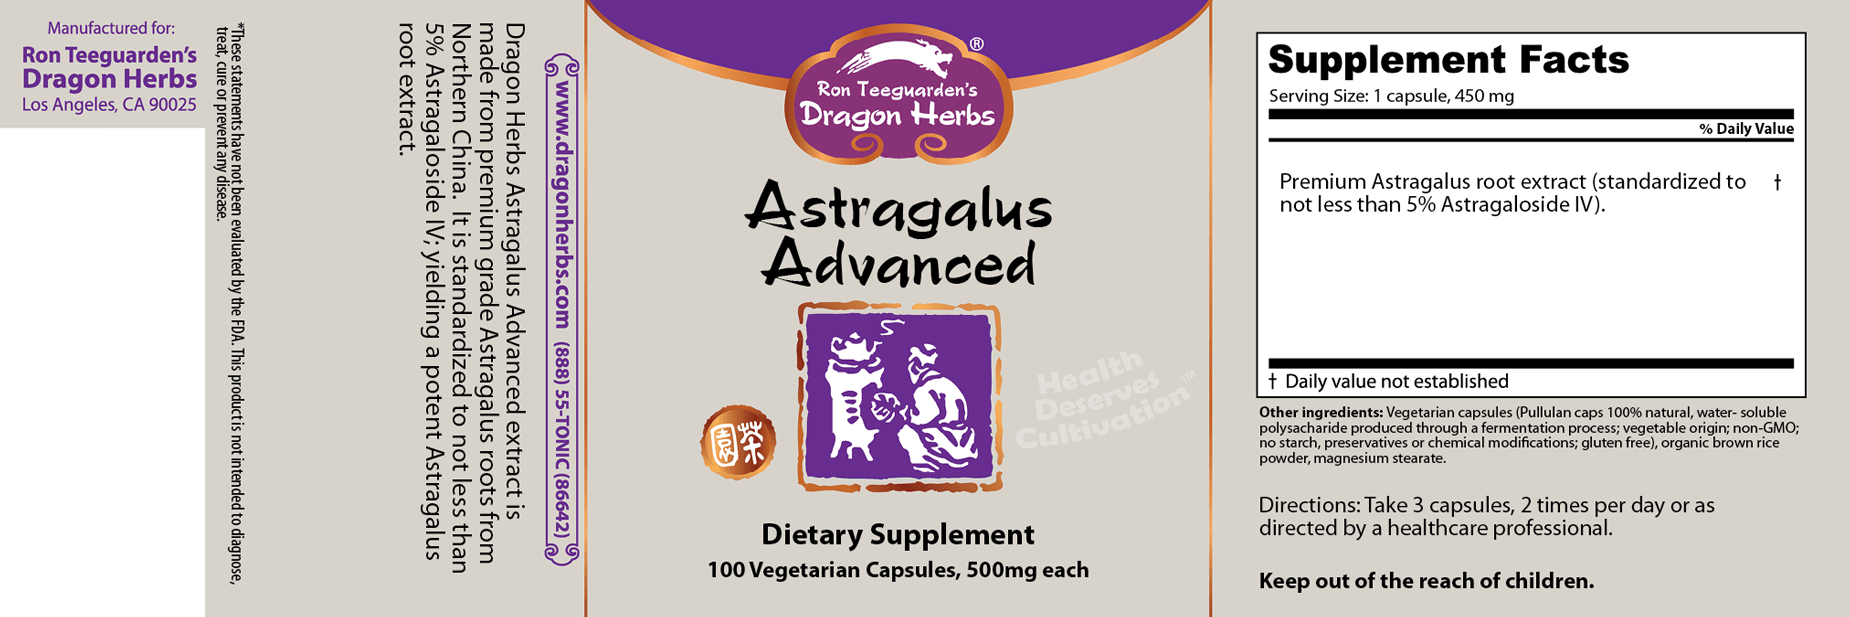 Astragalus Advanced Label - Dragon Herbs